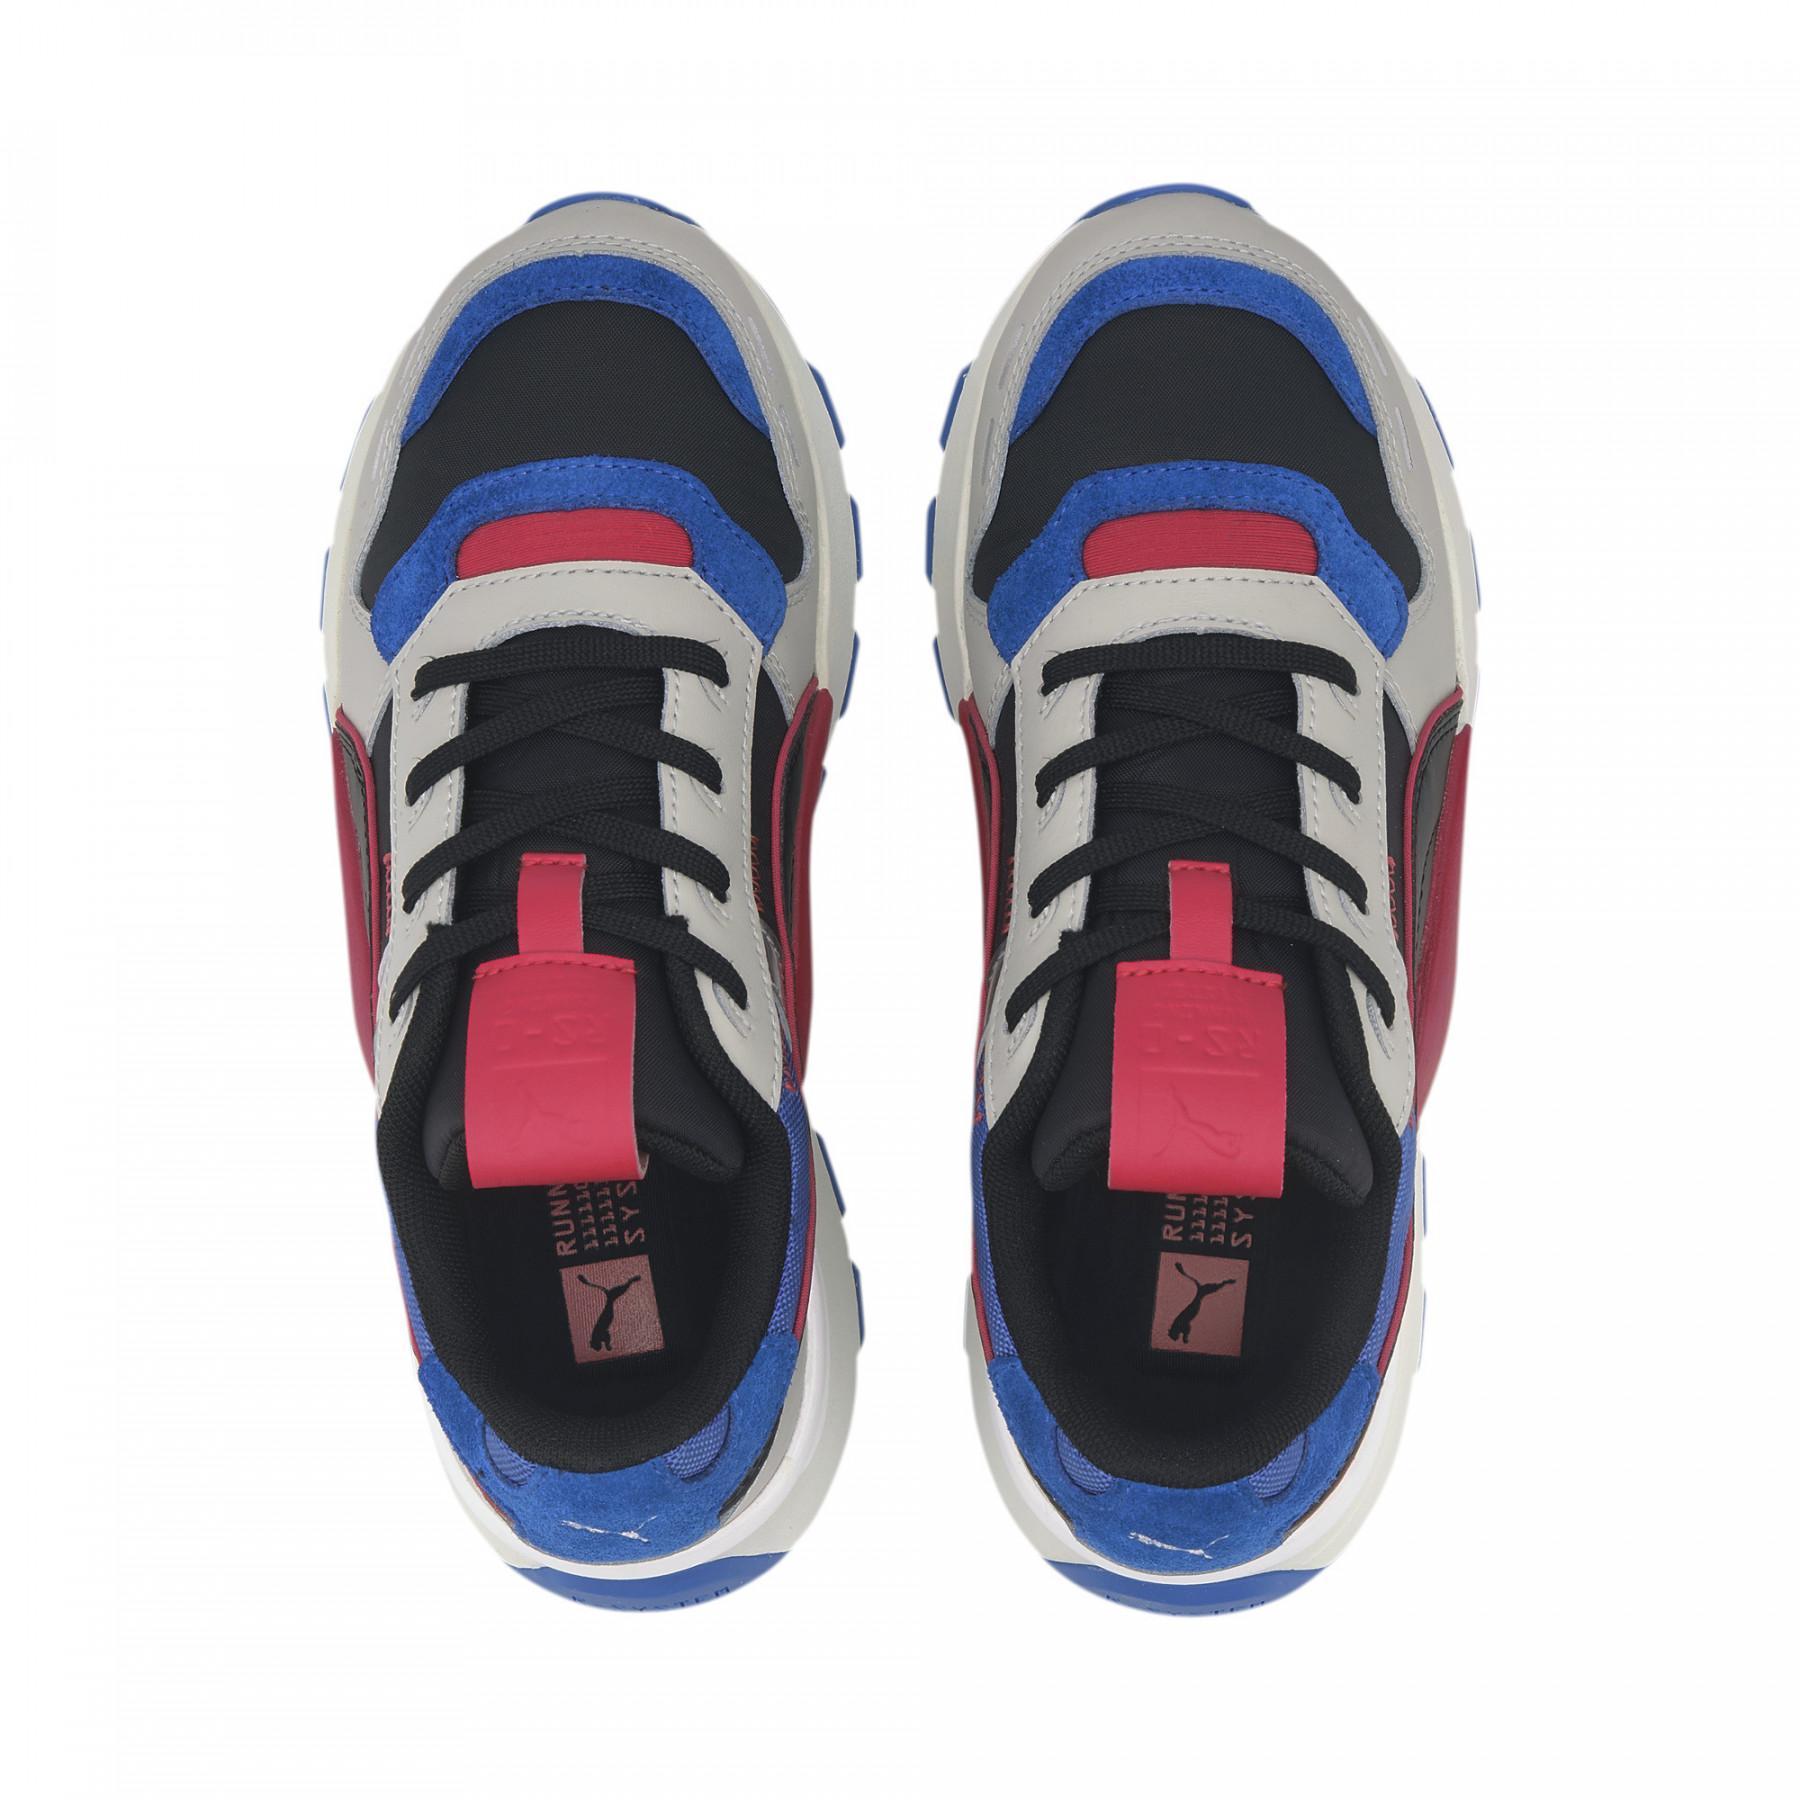 Children's sneakers Puma RS 2.0 Futura